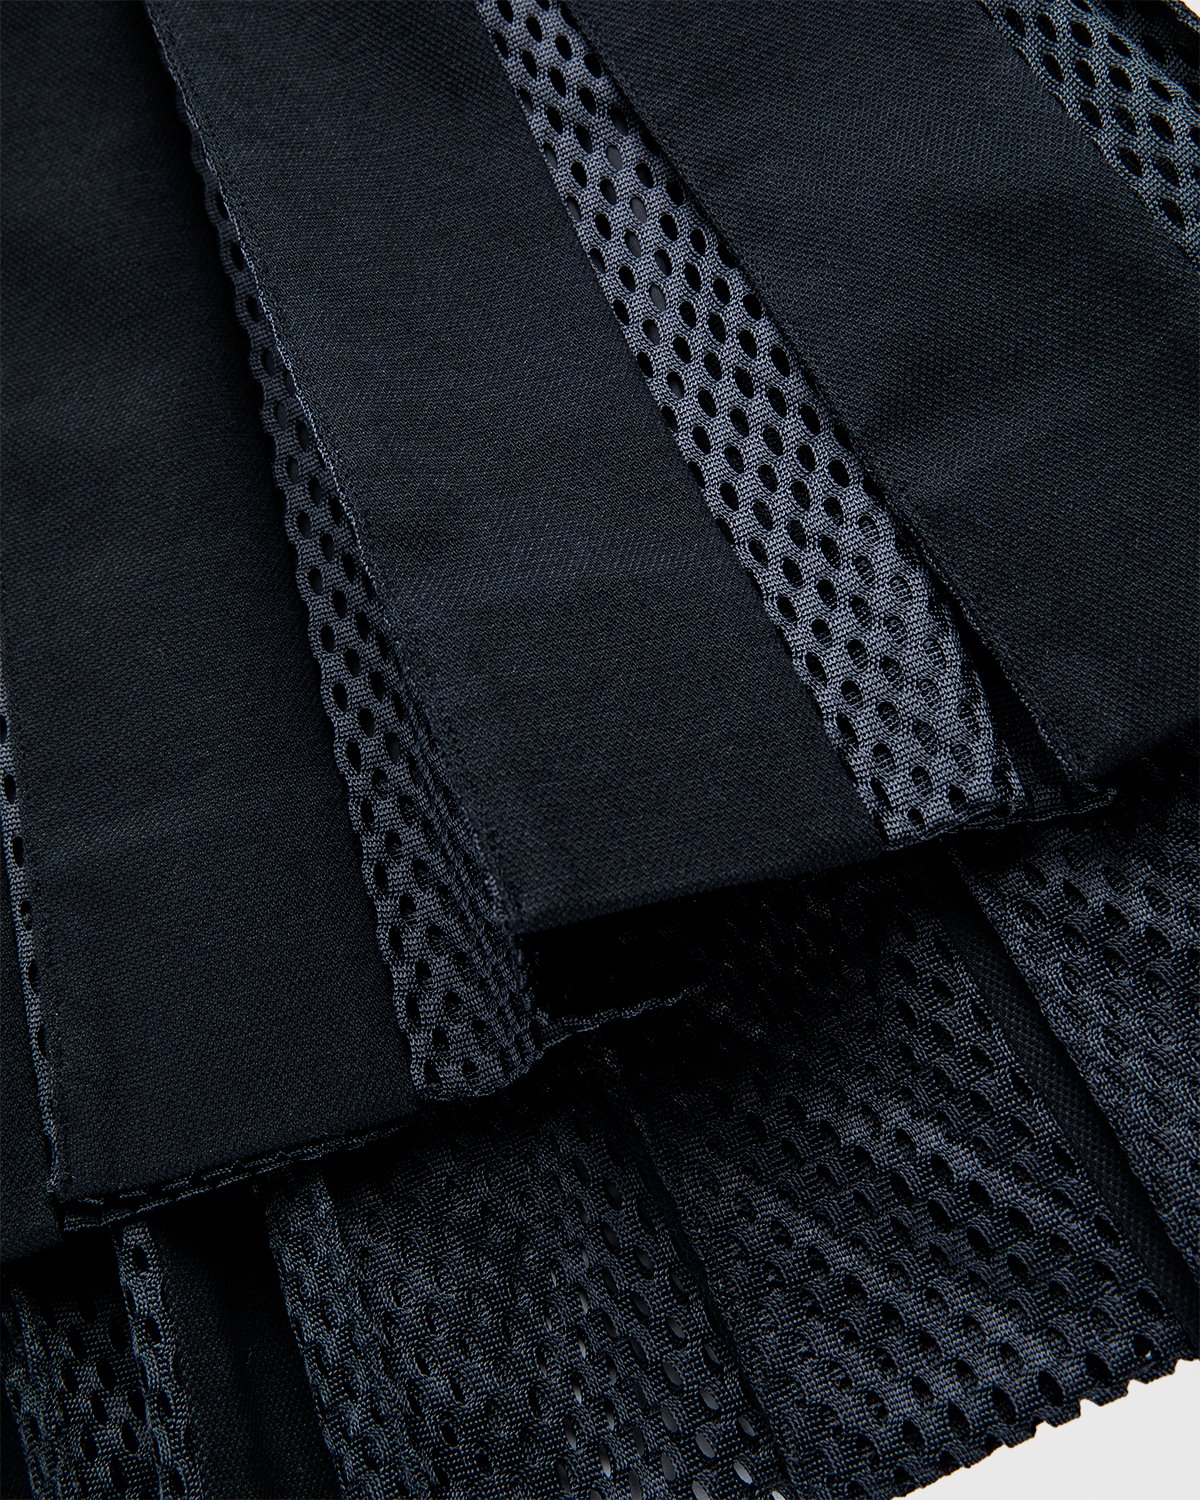 Thom Browne x Highsnobiety - Men's Pleated Mesh Skirt Black - Clothing - Black - Image 7